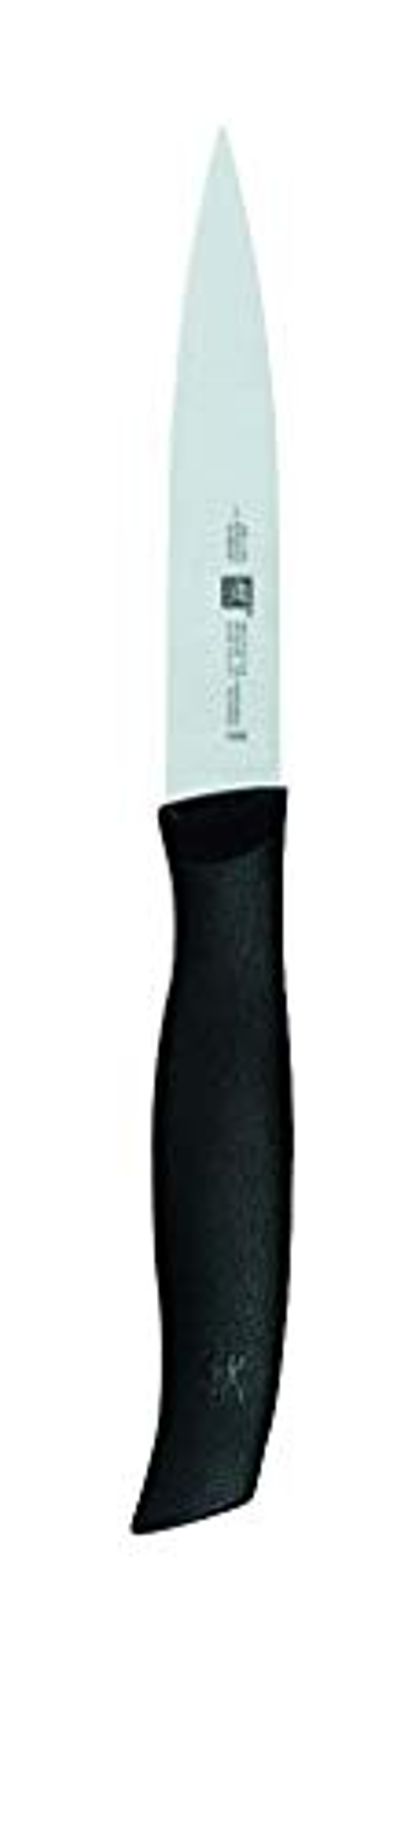 ZWILLING J.A. HENCKELS 38720-100 Twin Grip Paring Knife 4"/100 mm, Stainless Steel $9.99 (Reg $21.81)